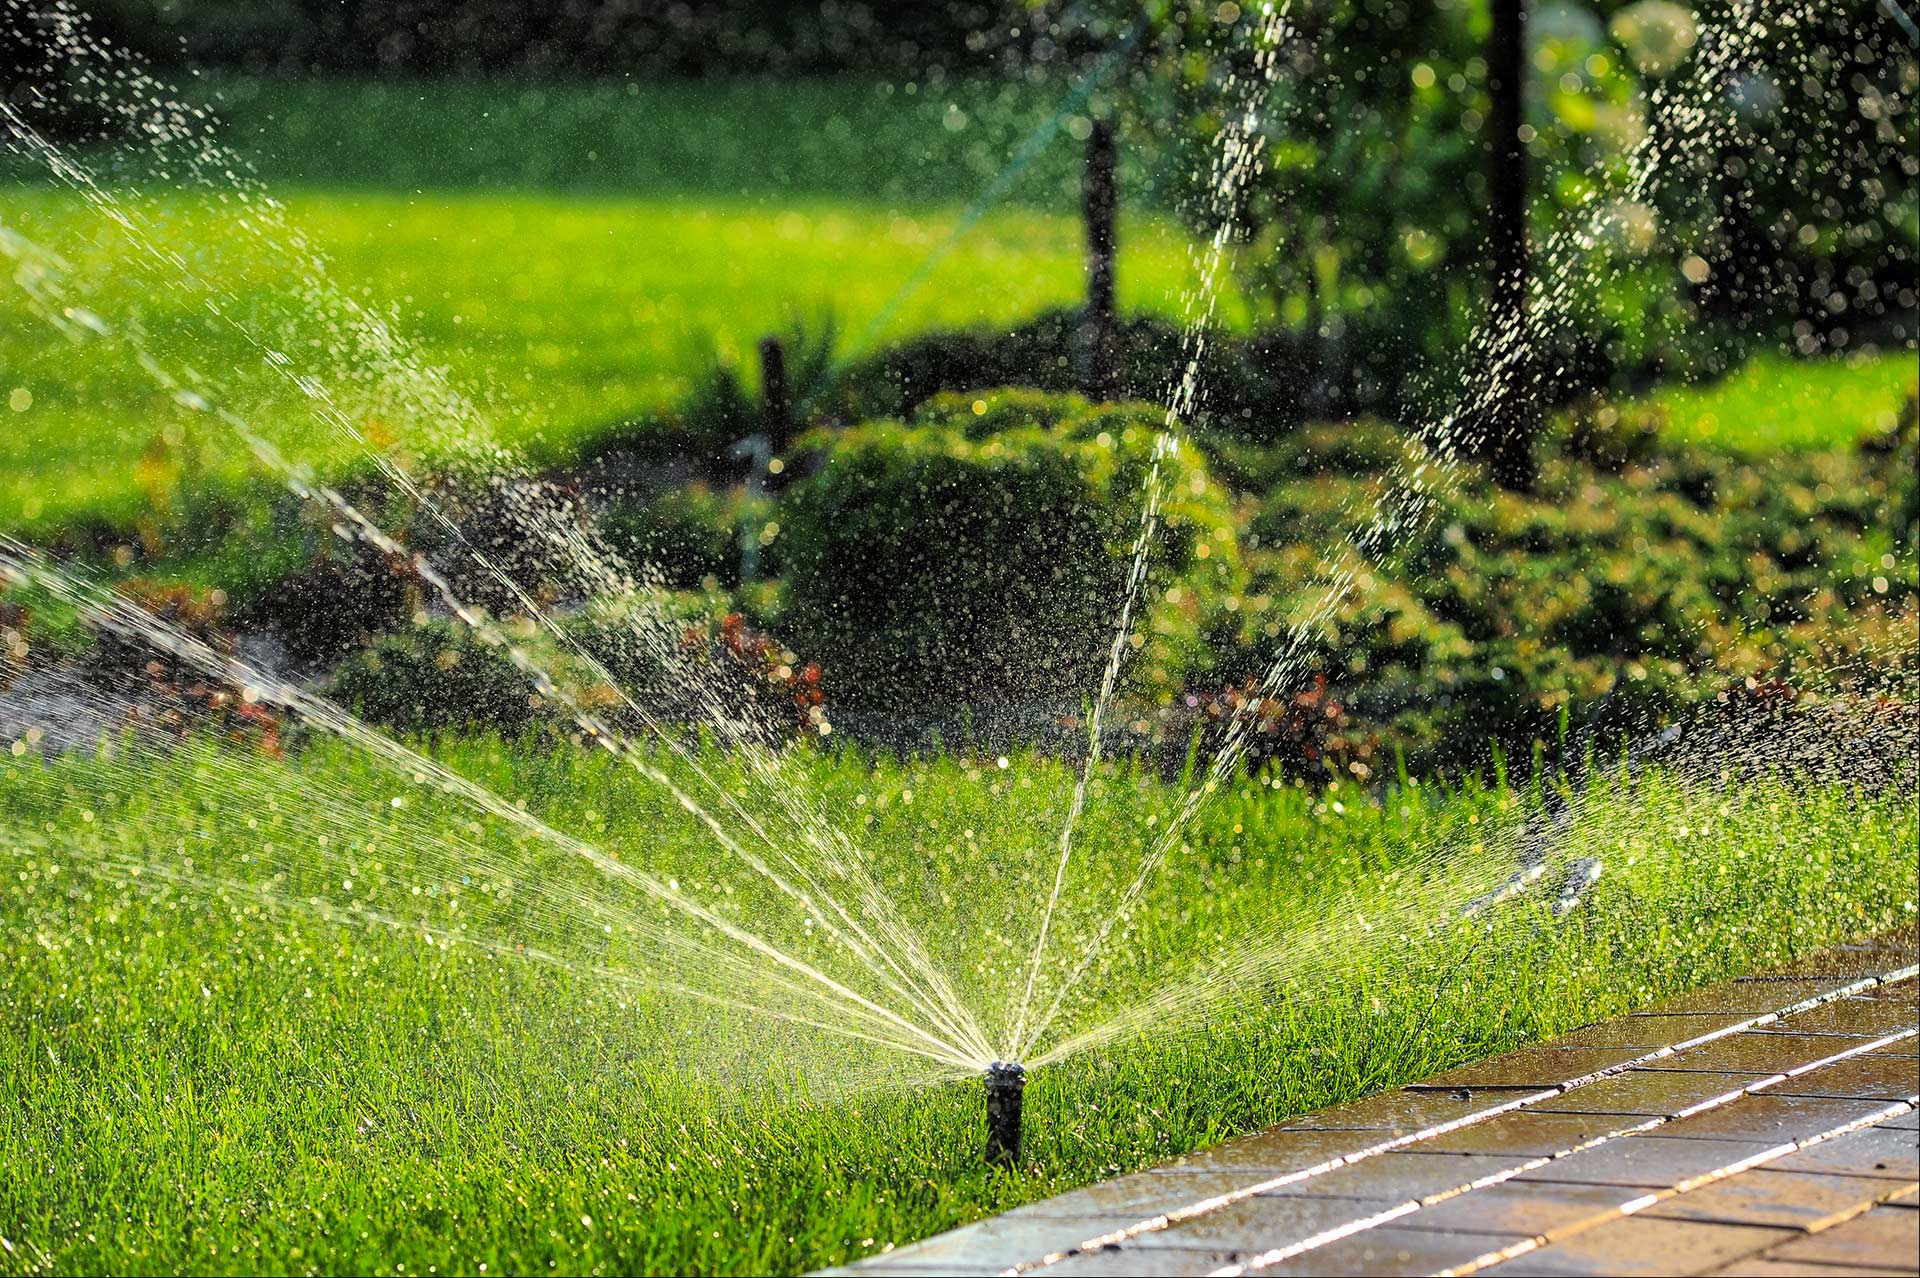 a sprinkler head watering a lawn